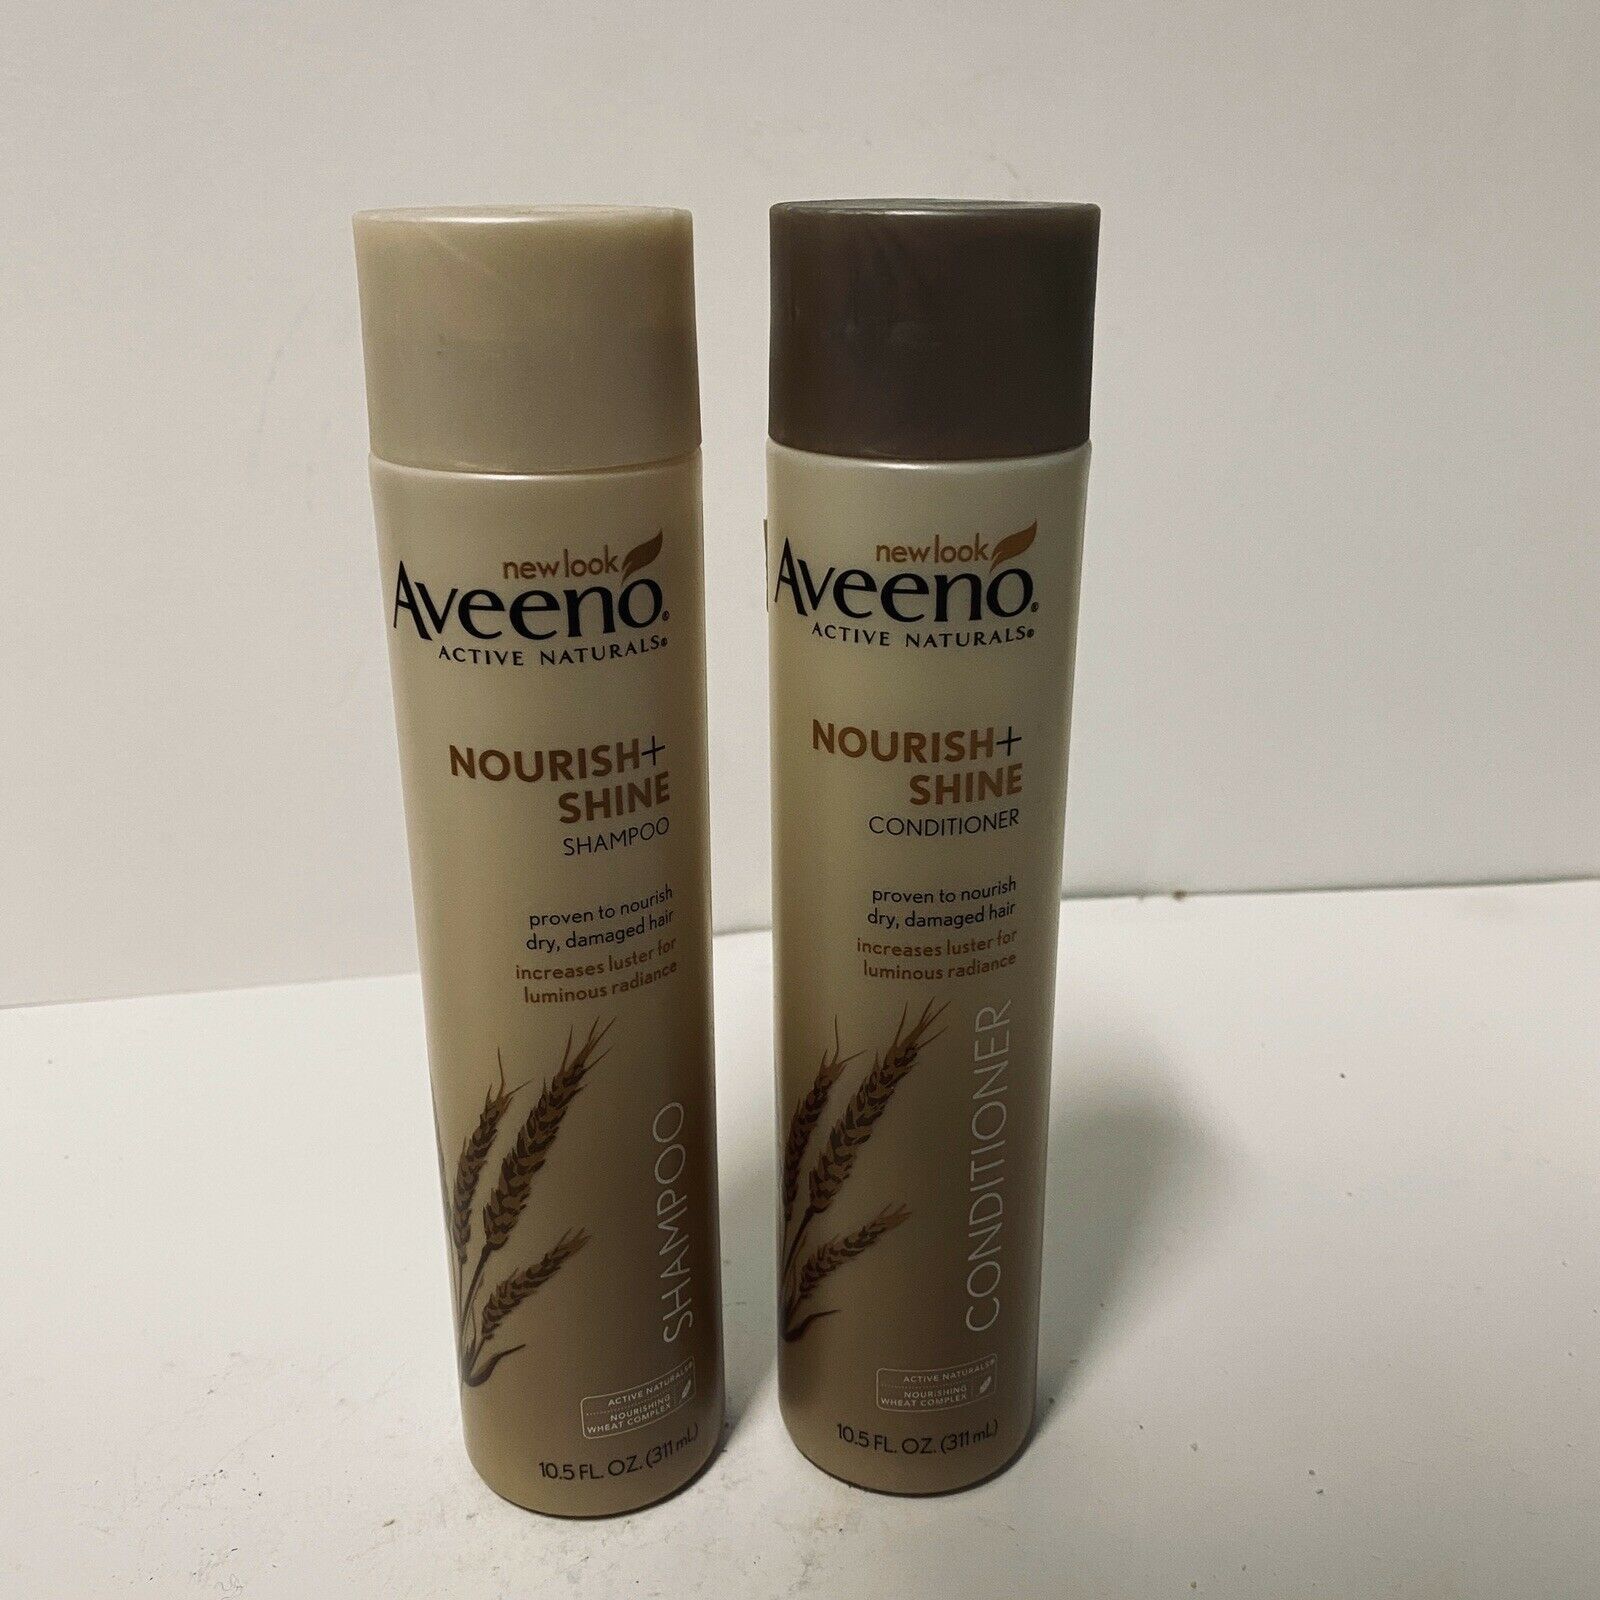 Aveeno Active Naturals Nourish Shine Shampoo Conditioner - $59.99